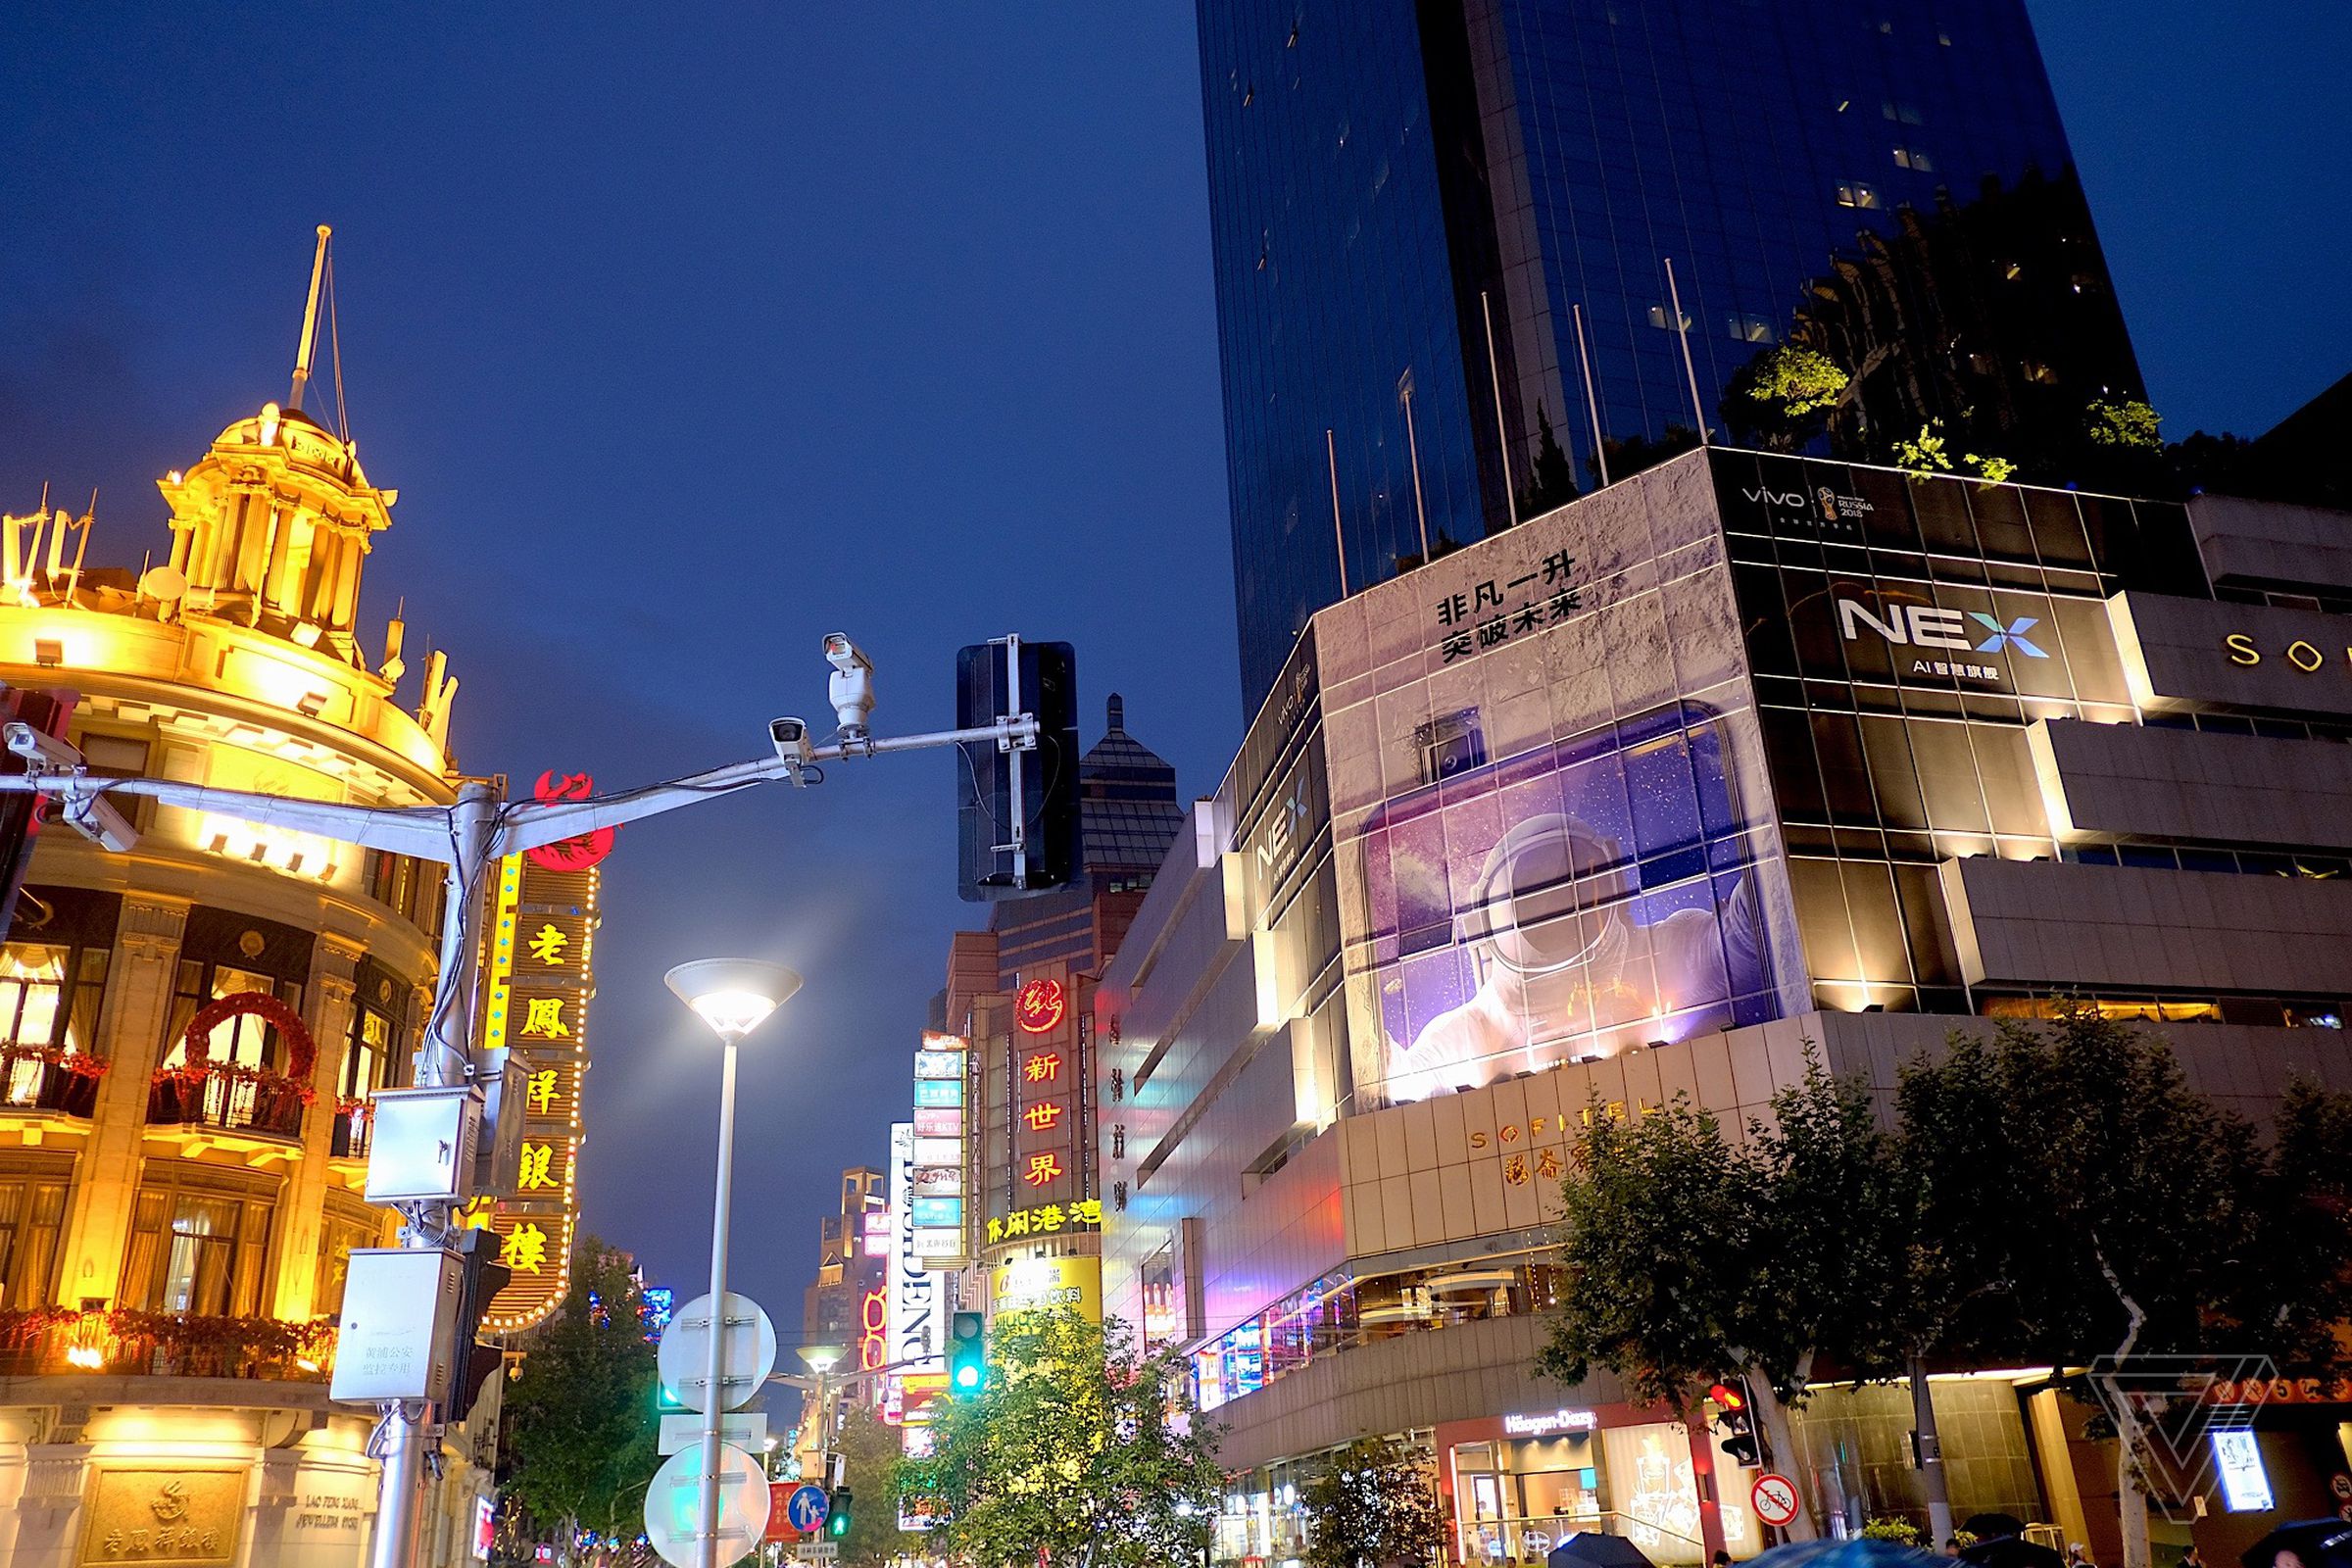 A large Vivo Nex billboard on Shanghai’s famous Nanjing Road shopping street.